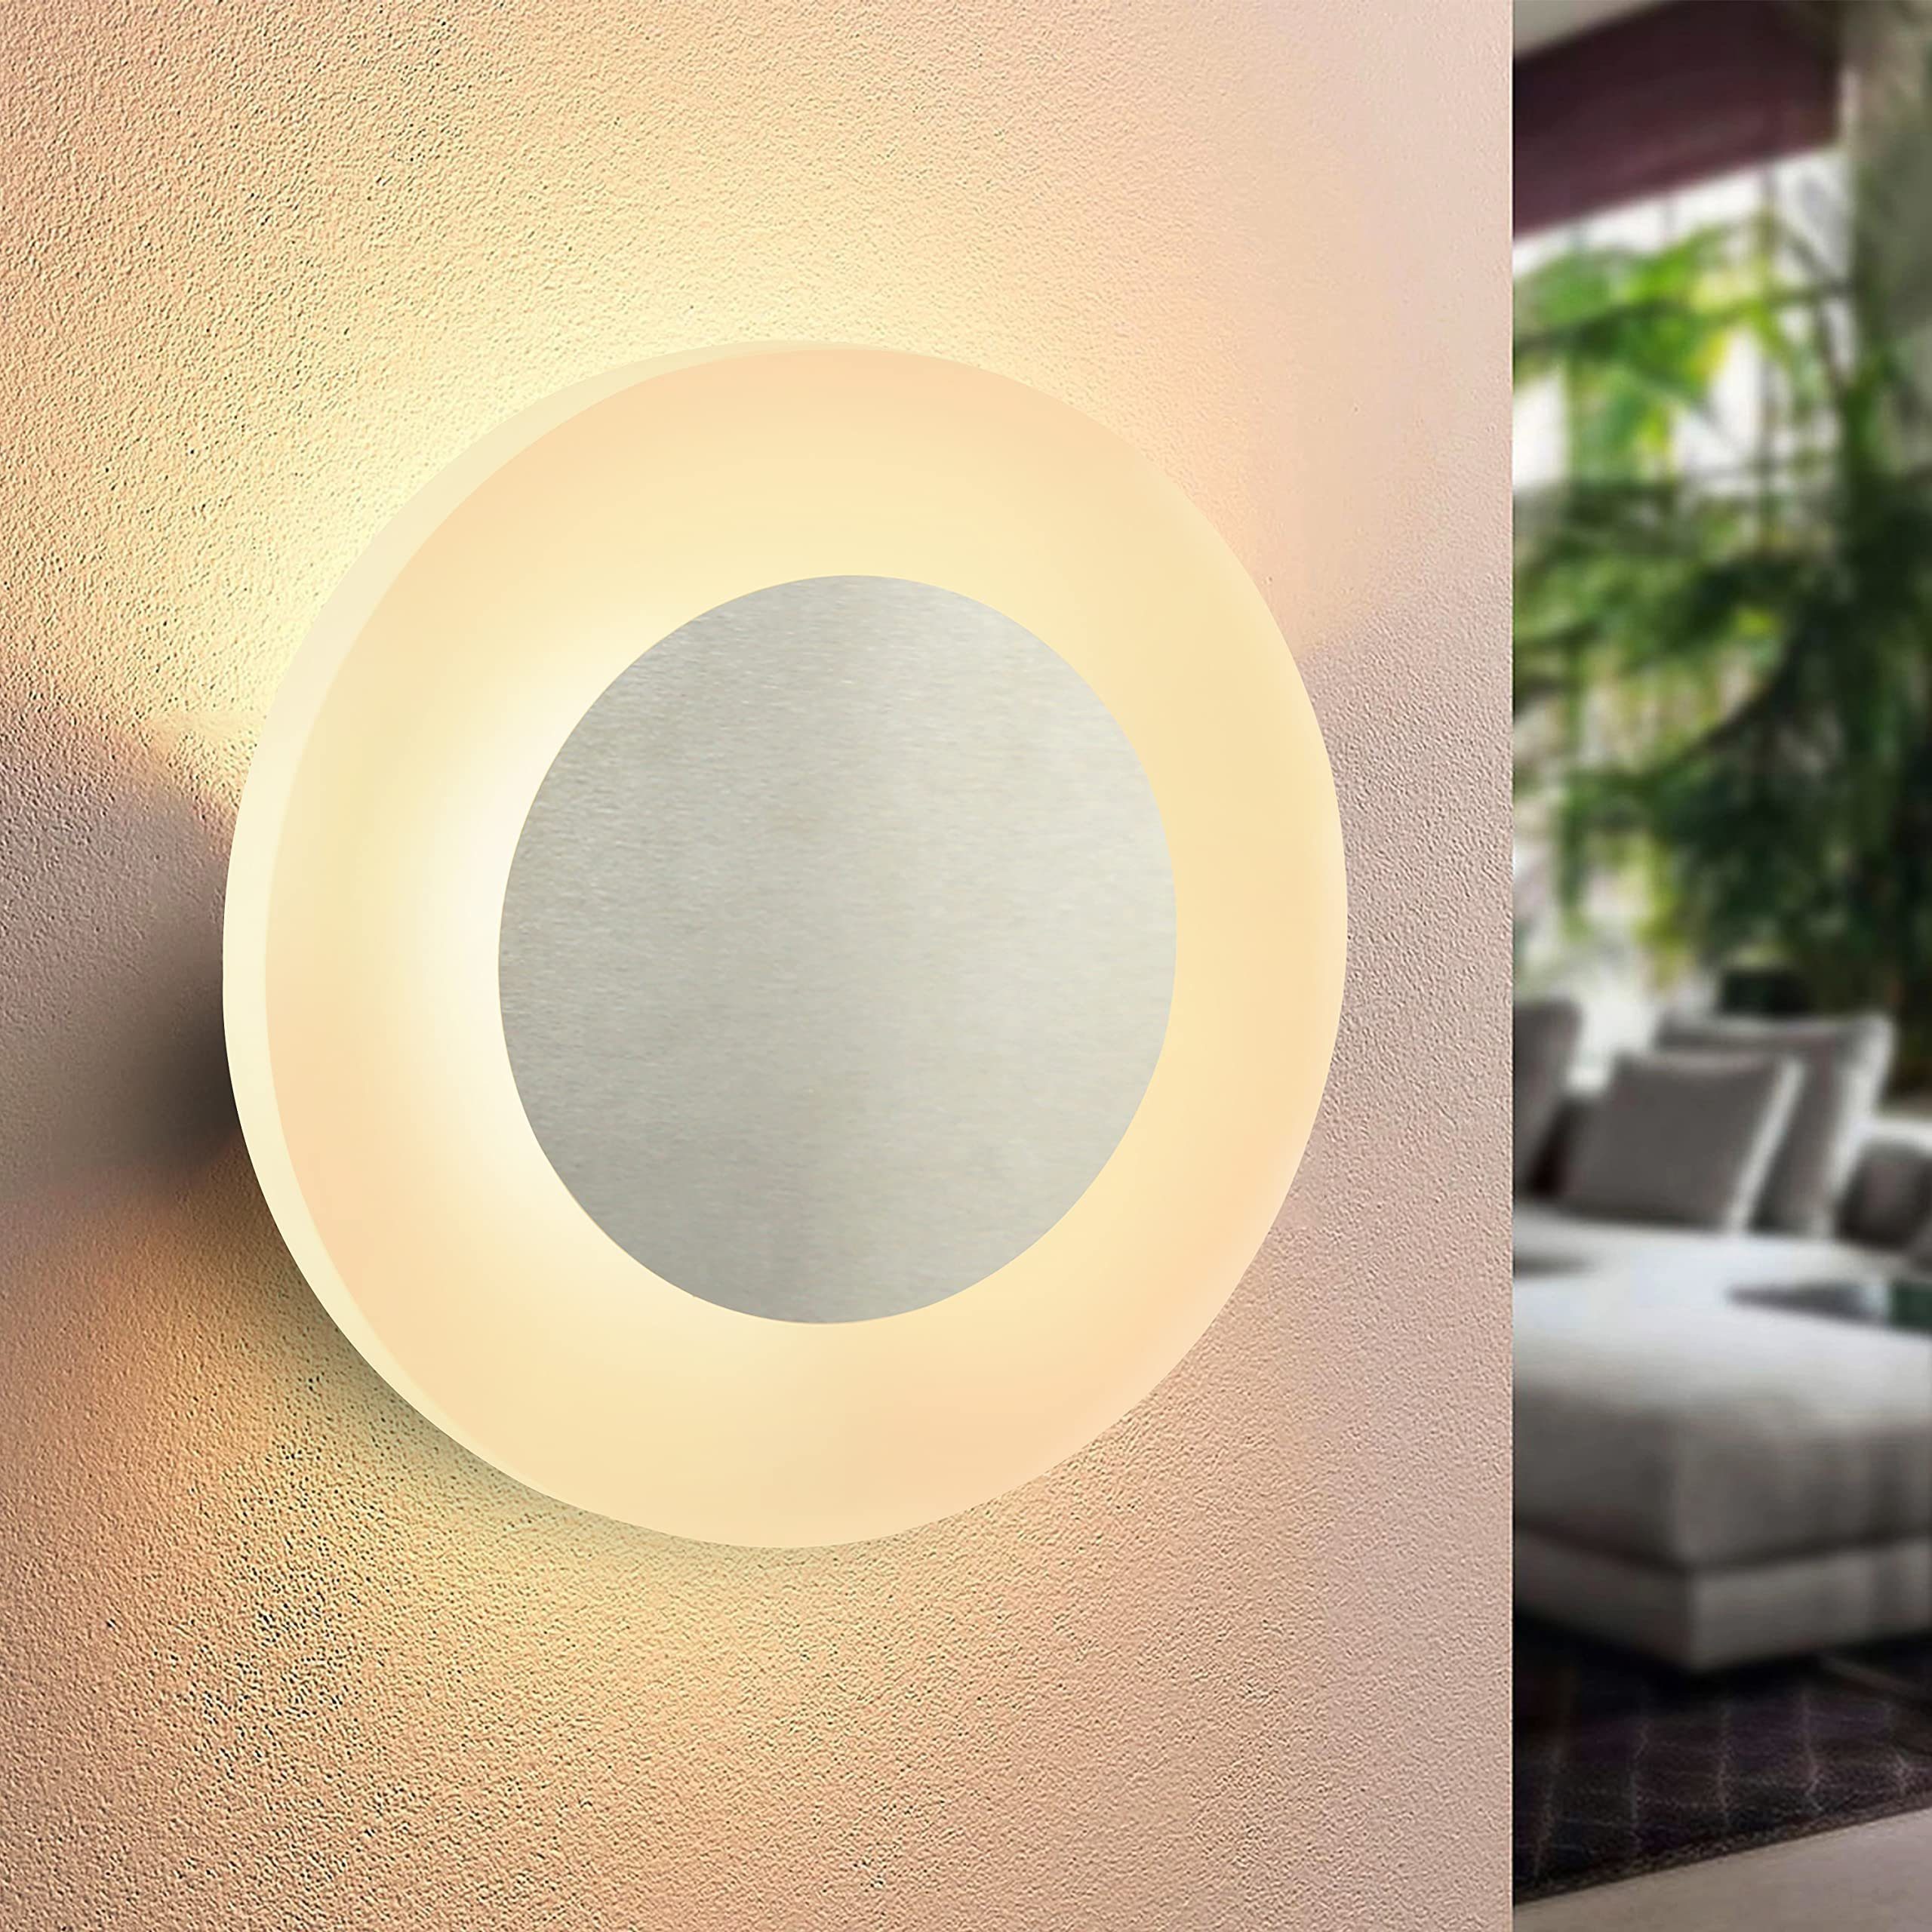 LED Wand Lampe chrom Arbeits Zimmer Spot Flur Strahler Design Leuchte schwenkbar 